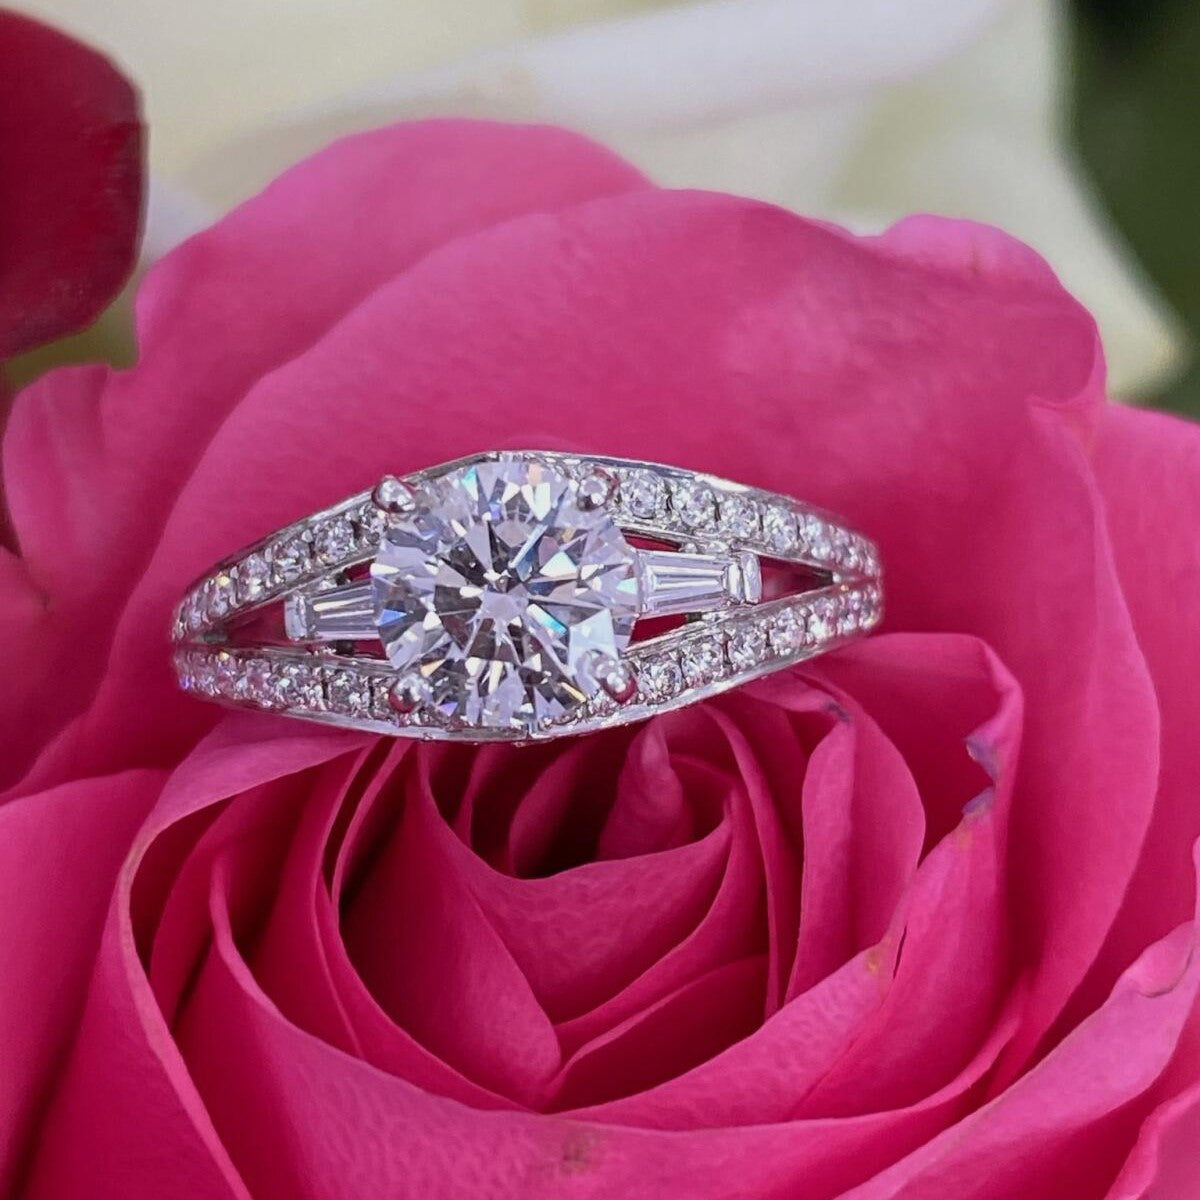 14K White Gold Diamond Engagement Ring With 1.06 Carat Round Diamond